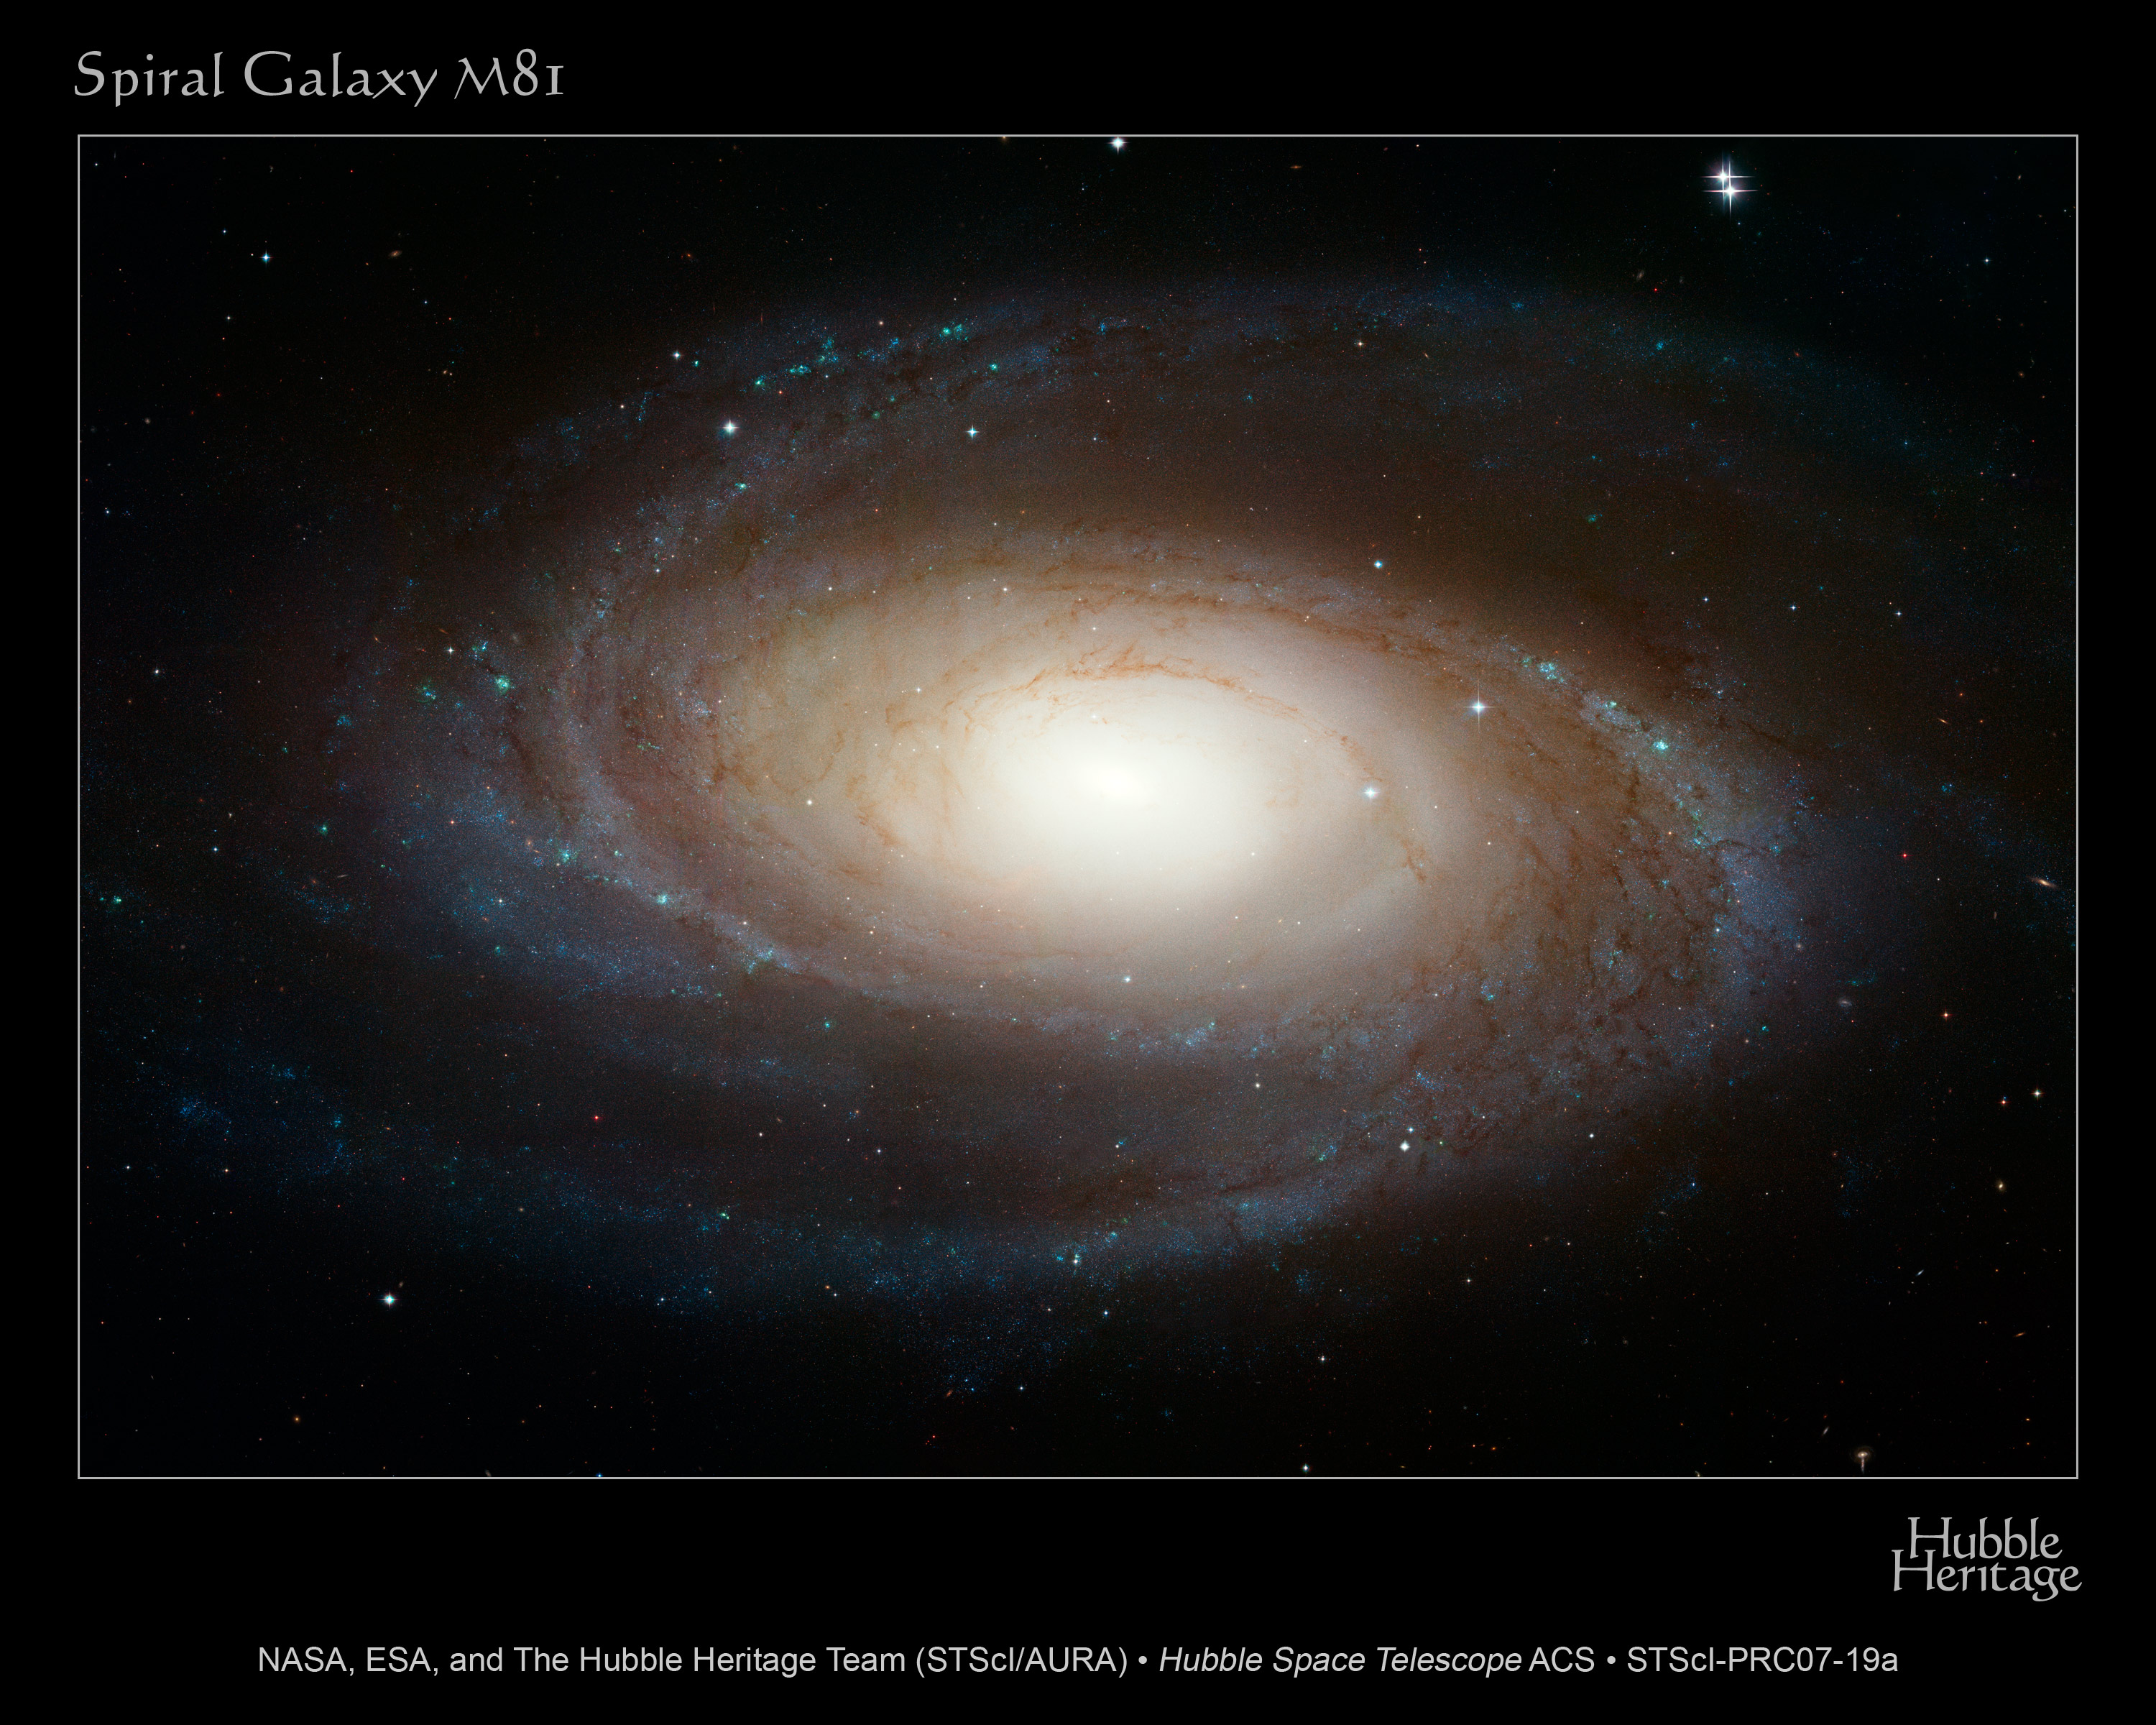 La galaxia M81. Fuente: NASA, ESA, and The Hubble Heritage Team (STScI/AURA).